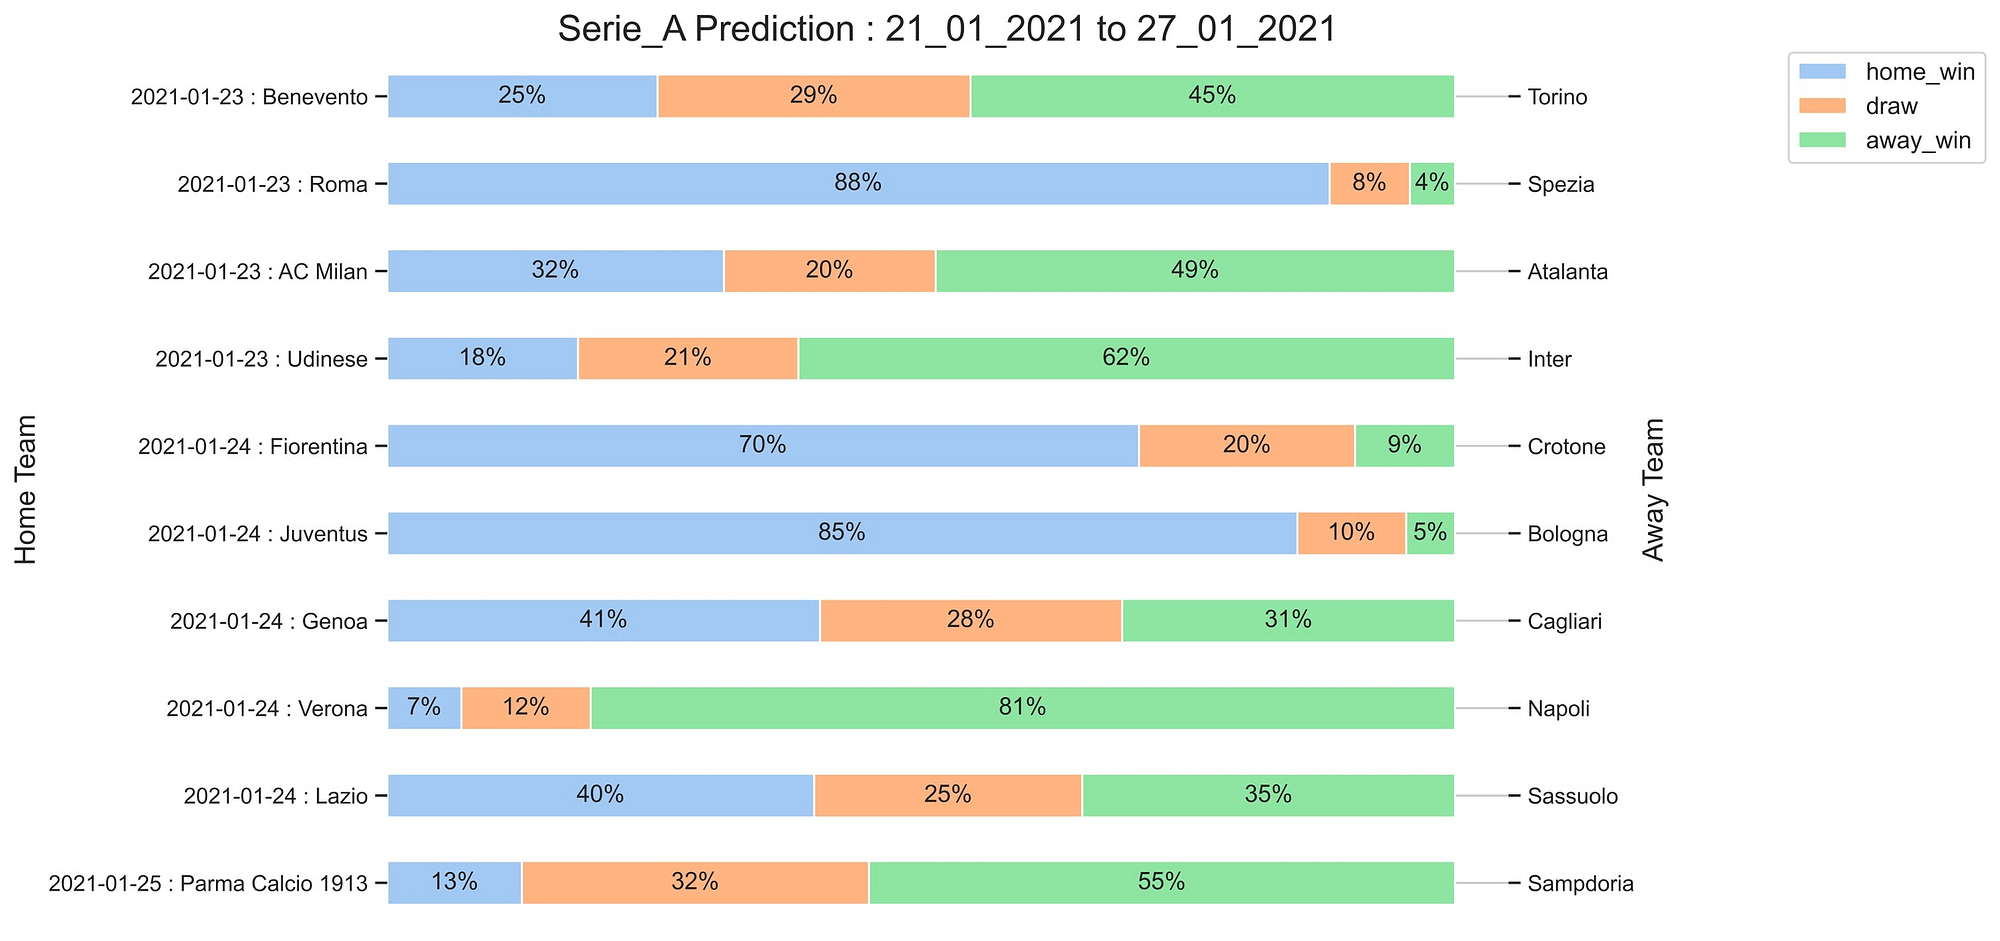 Serie_A_Prediction 21_01_2021